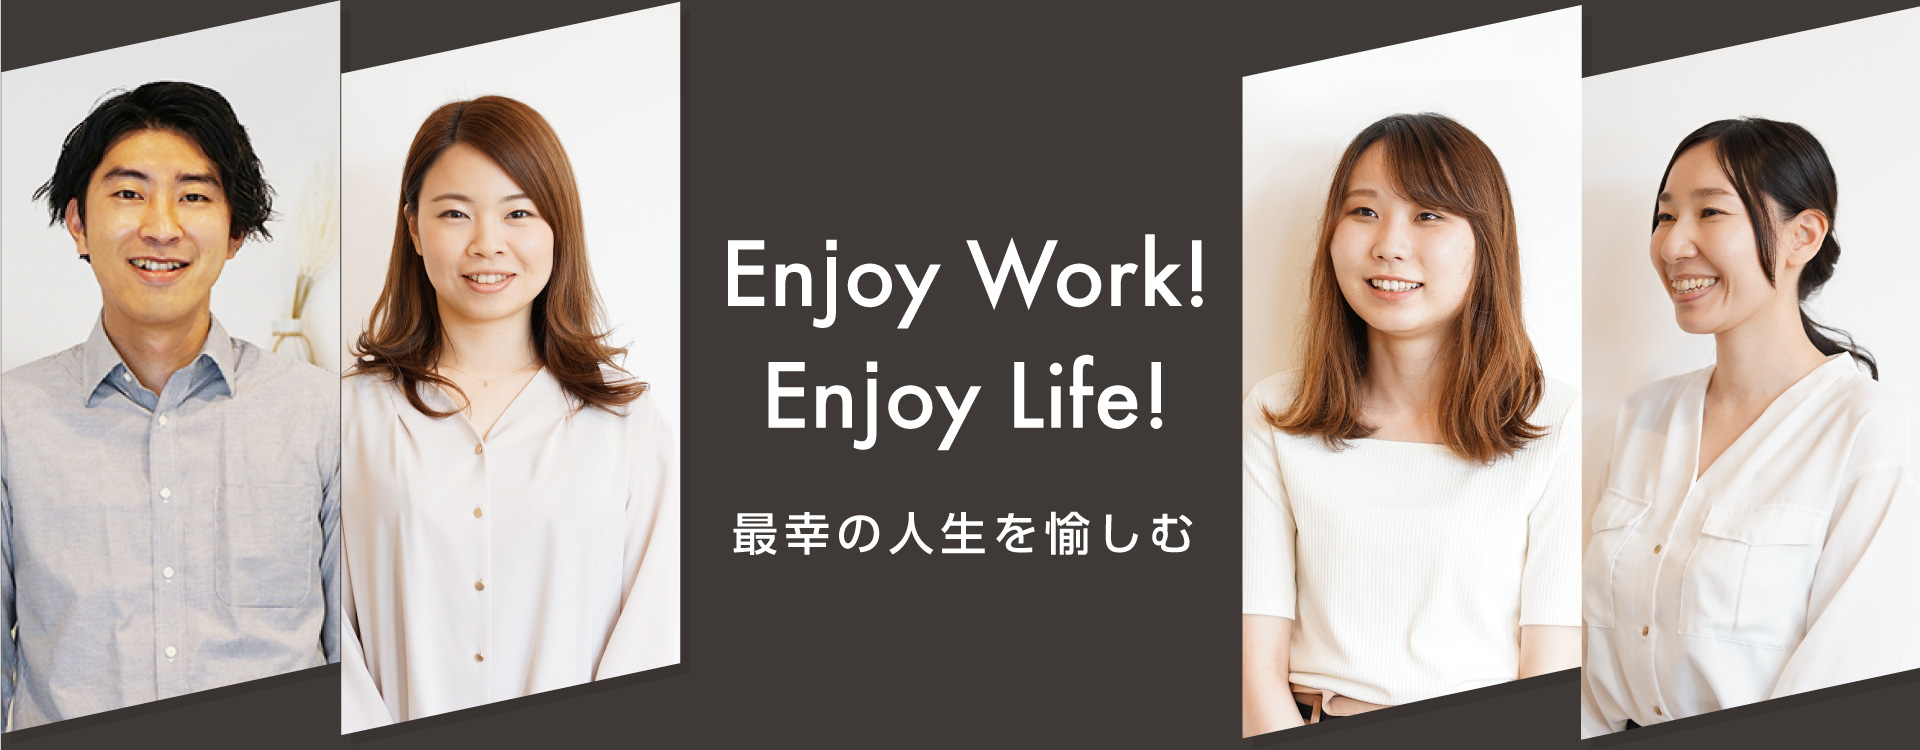 Enjoy Wok!Enjoy Life!最幸の人生を愉しむ